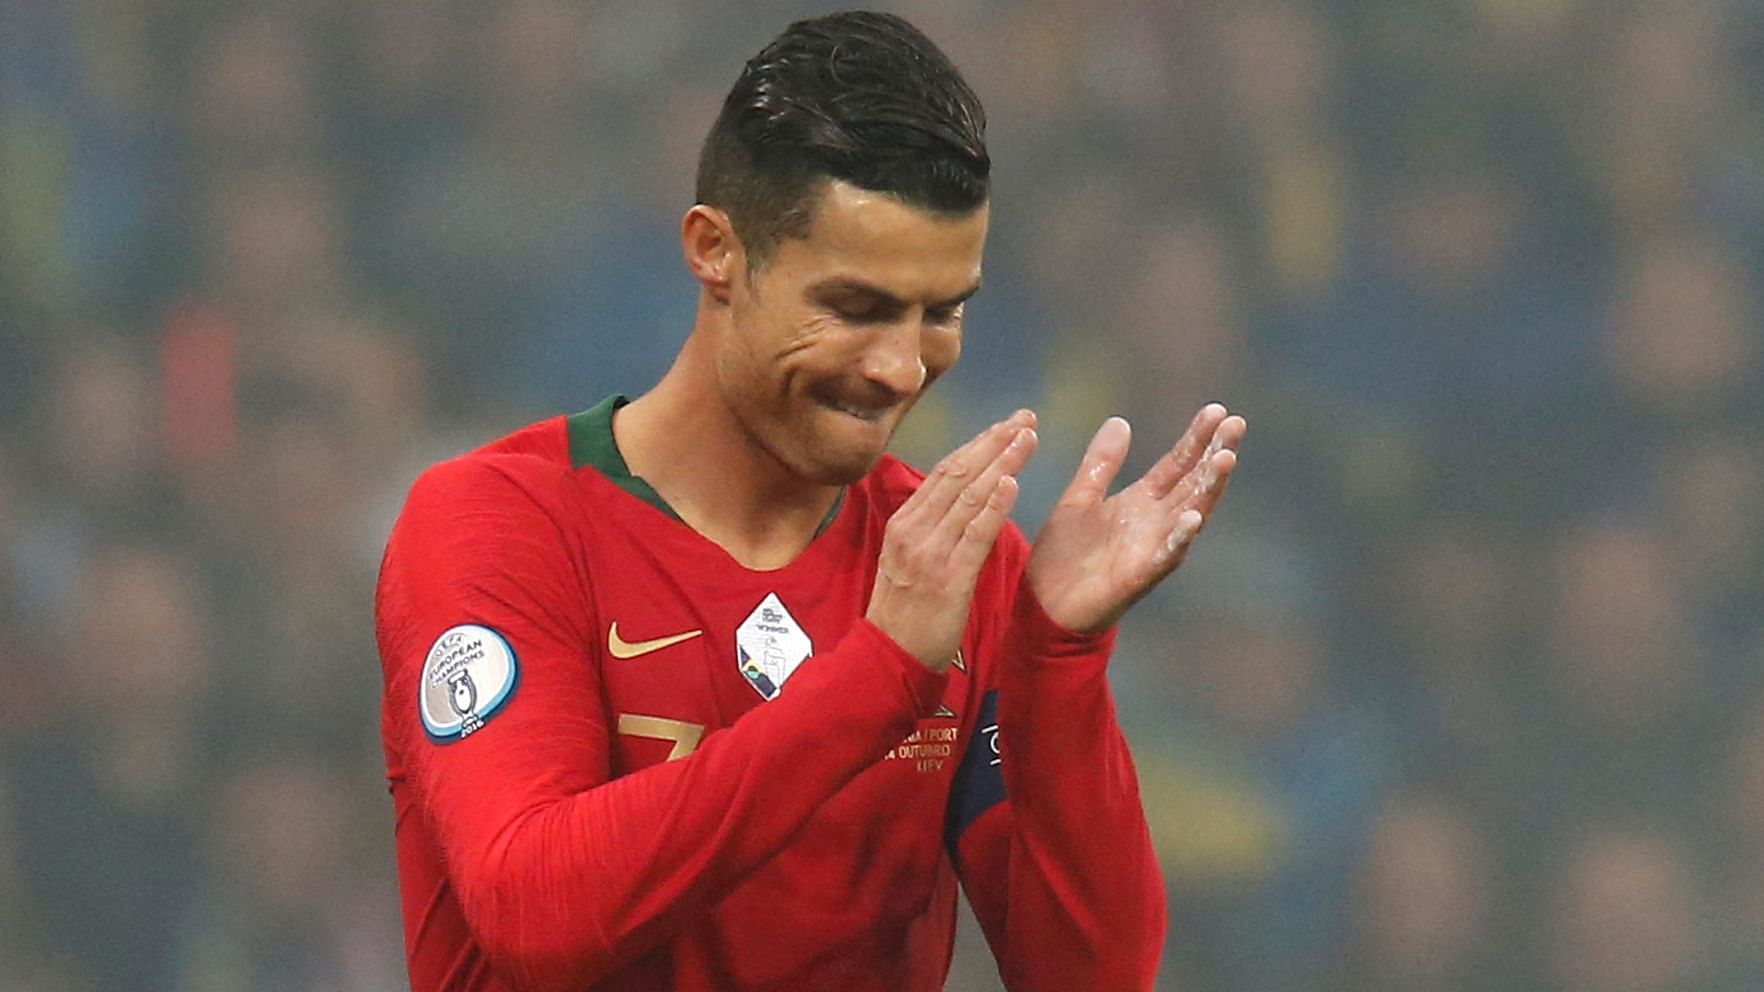 Cristiano Ronaldo scored his 99th international goal during Portugal’s Euro 2020 qualifier.